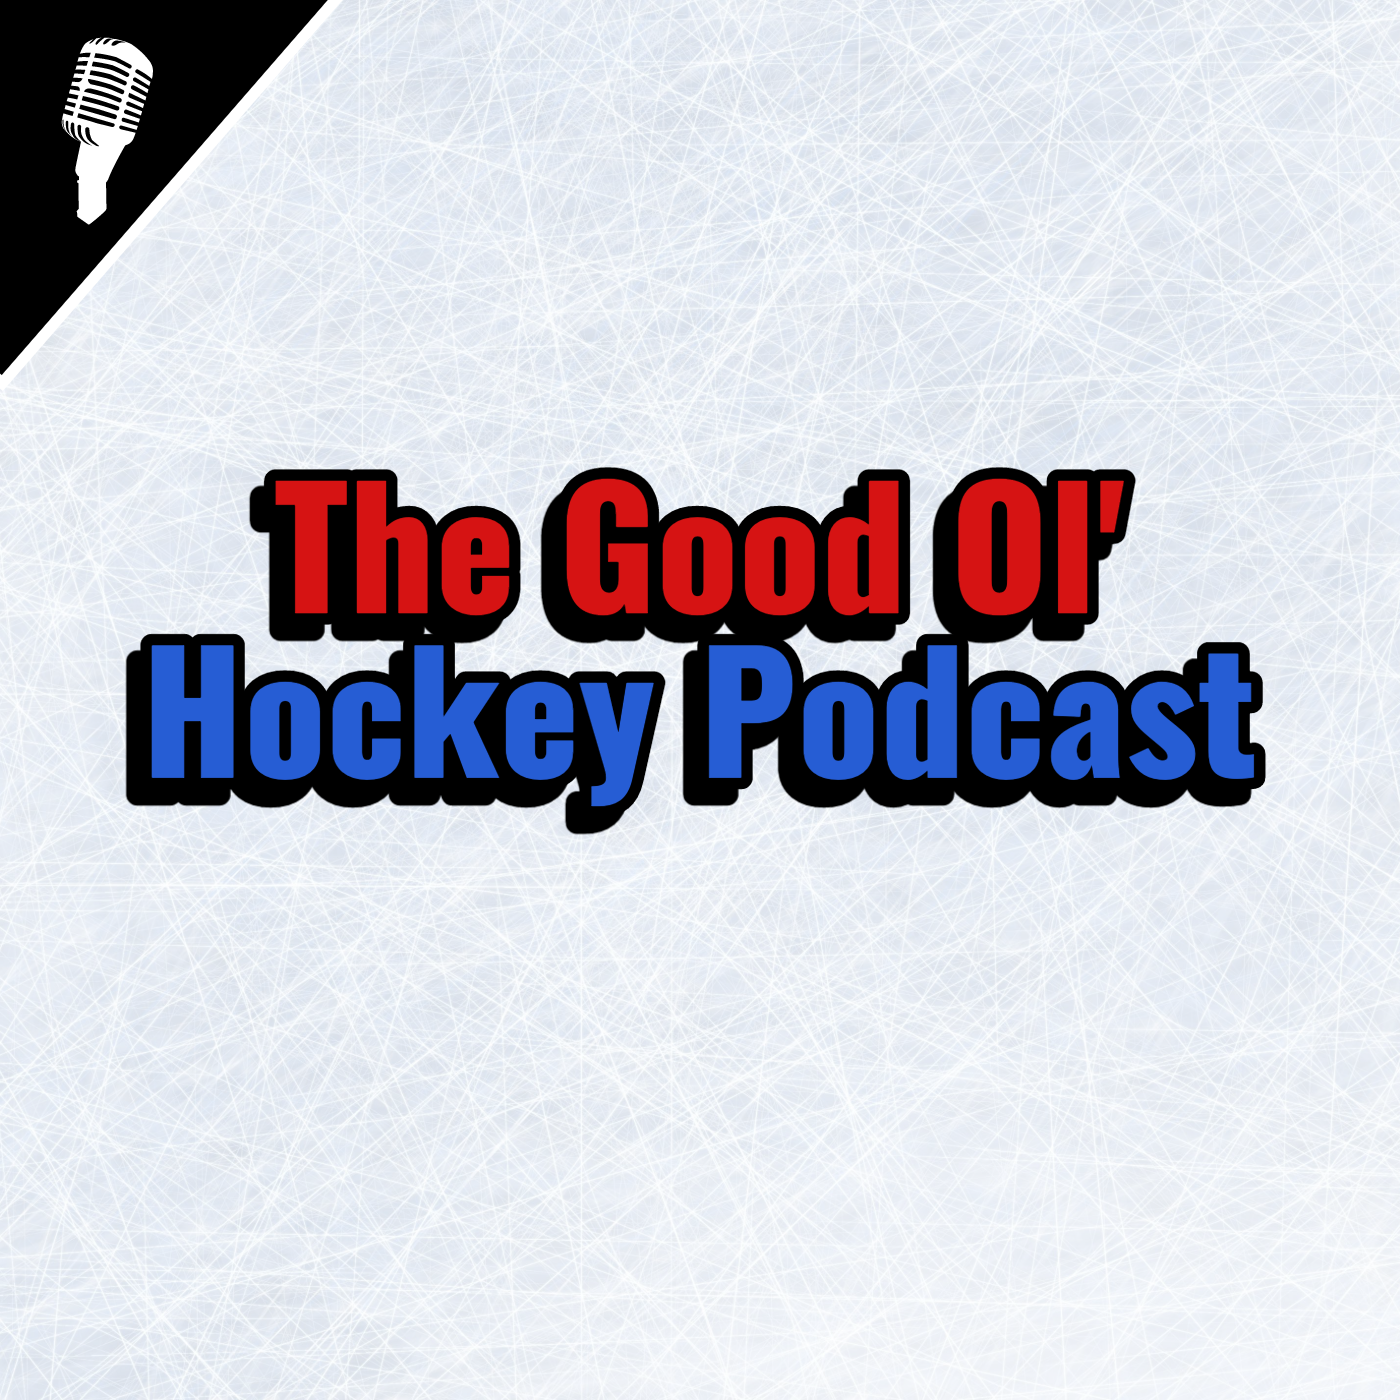 NHL Playoff Race Heats Up: Contenders, Pretenders & Dark Horses | Good Ol Hockey Podcast Ep. 23